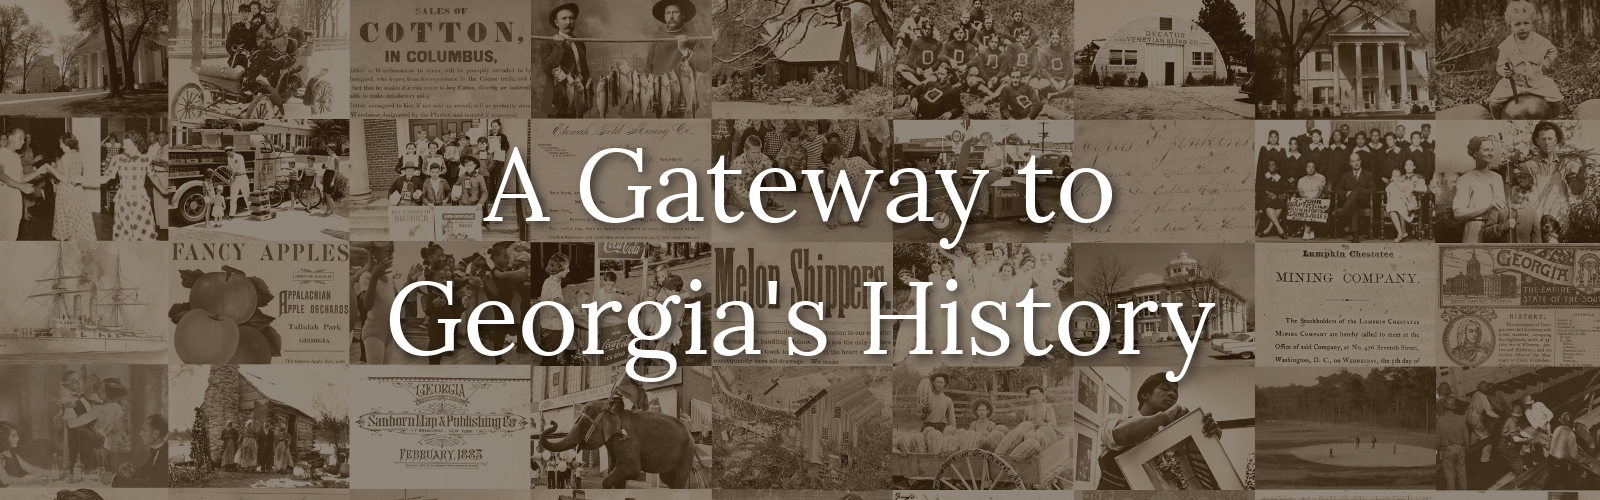 A Gateway to Georgia's History